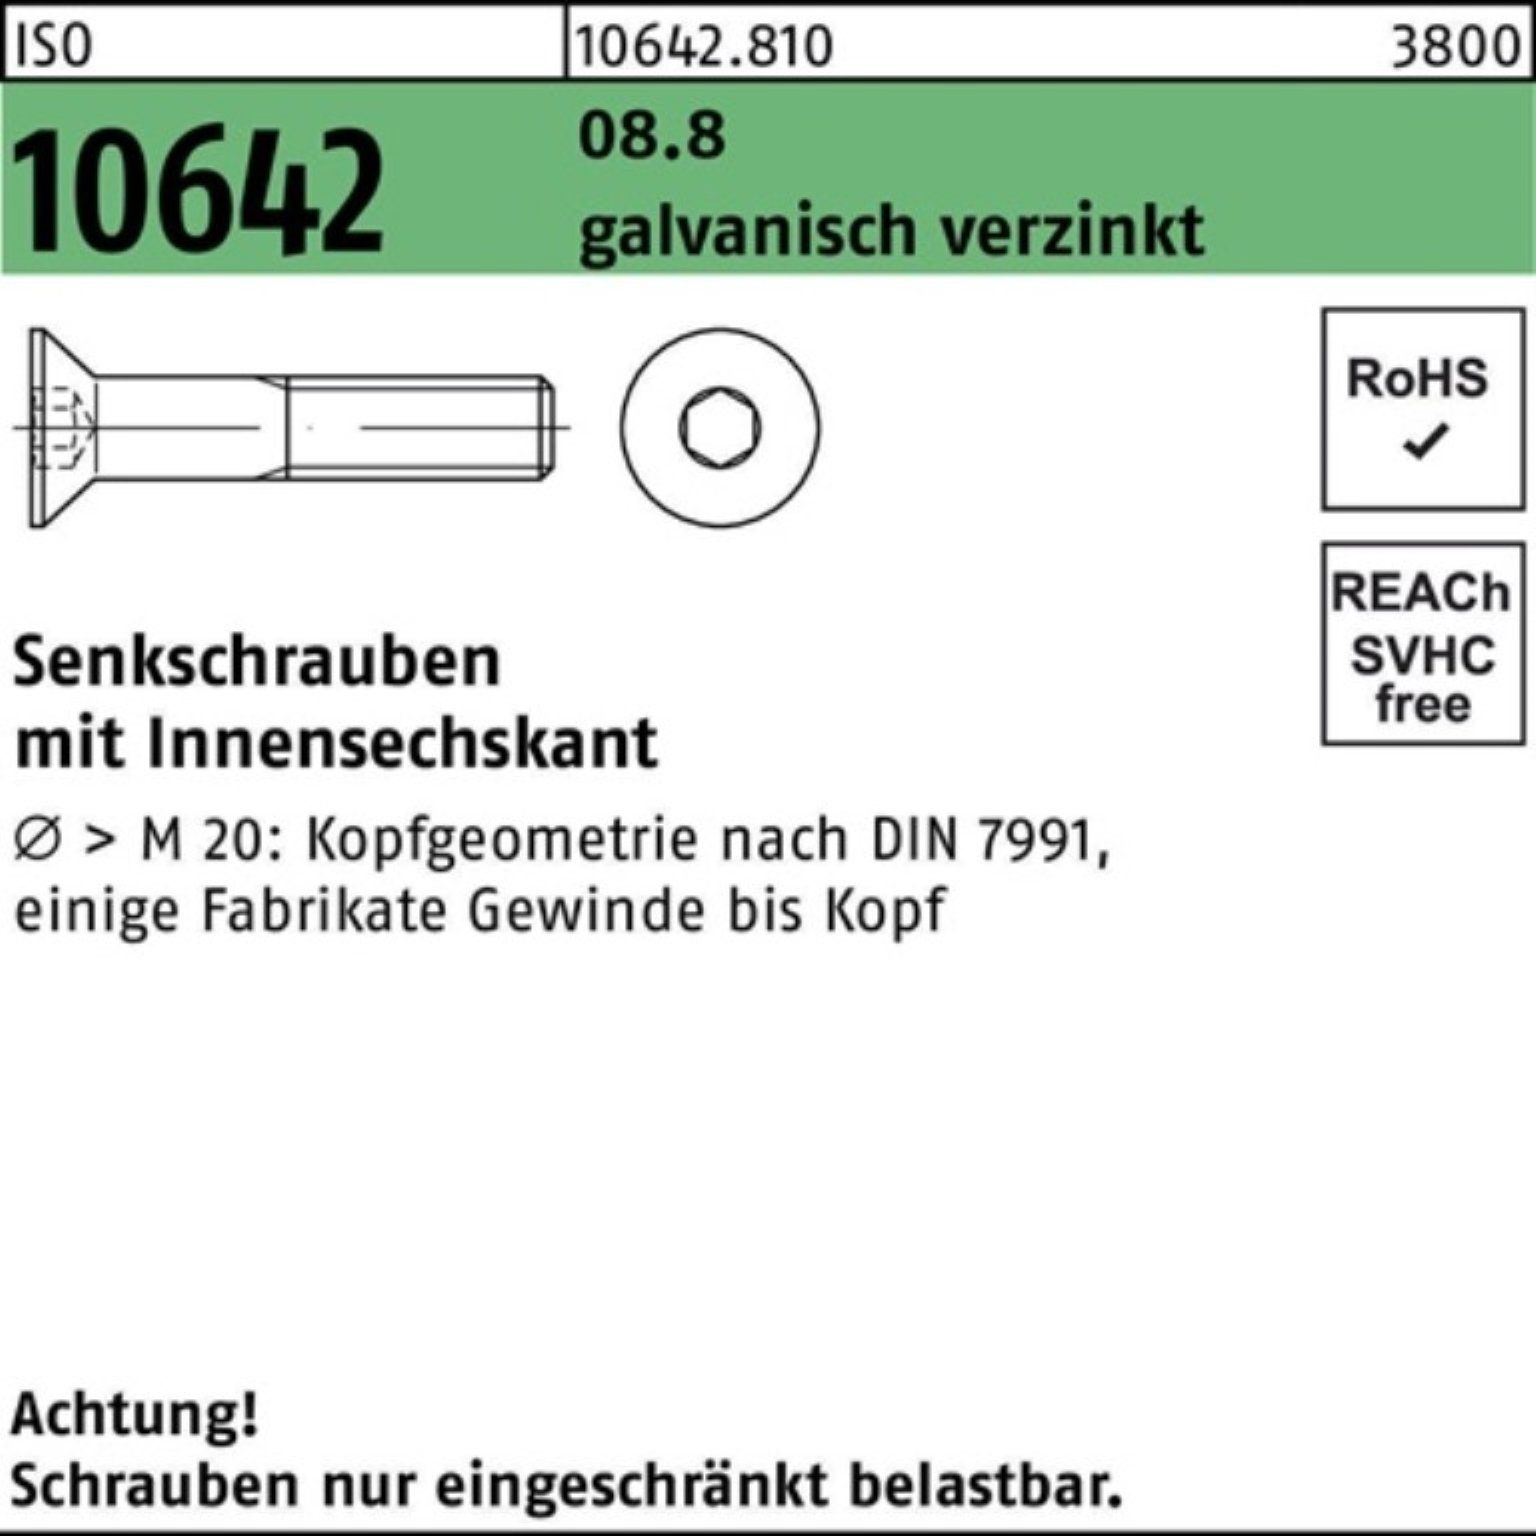 200 200er Senkschraube Senkschraube 10642 galv.verz. 35 M5x Innen-6kt 8.8 Pack Reyher ISO